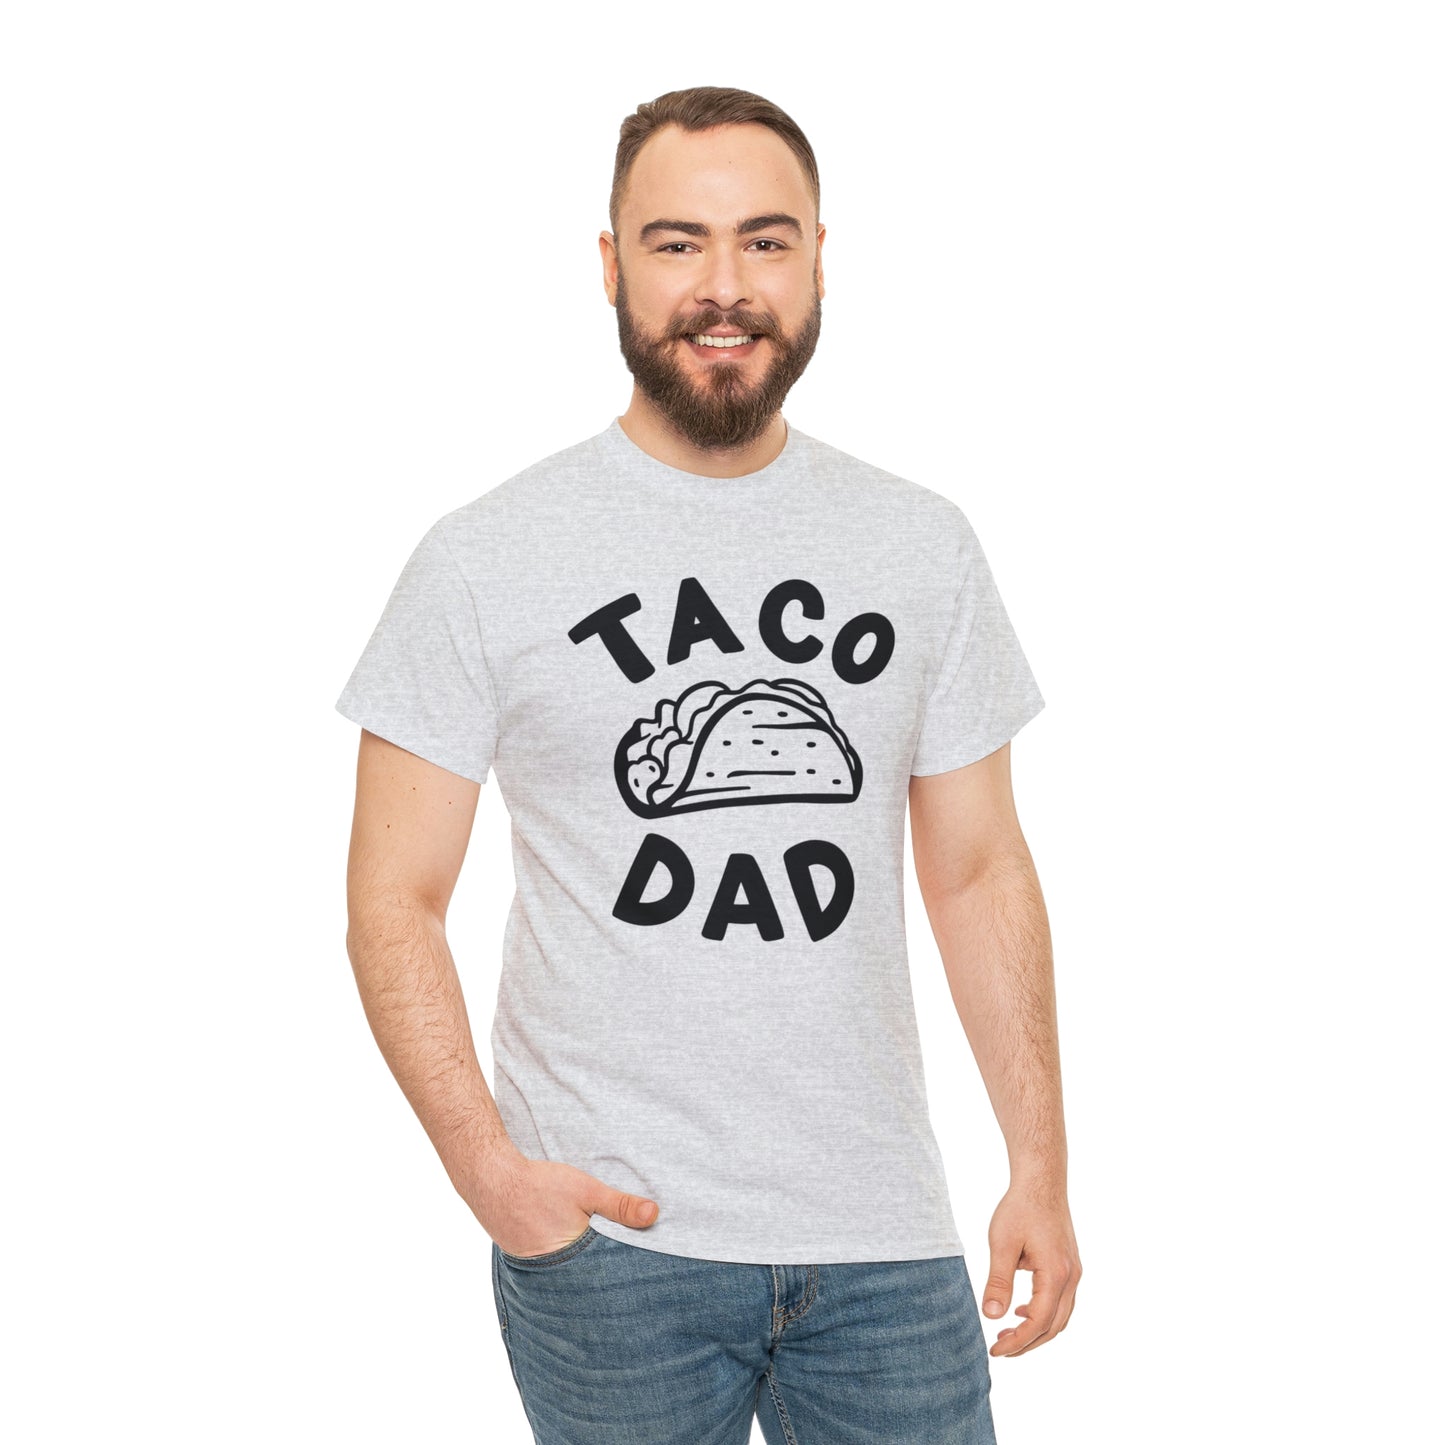 TACO DAD T-SHIRT